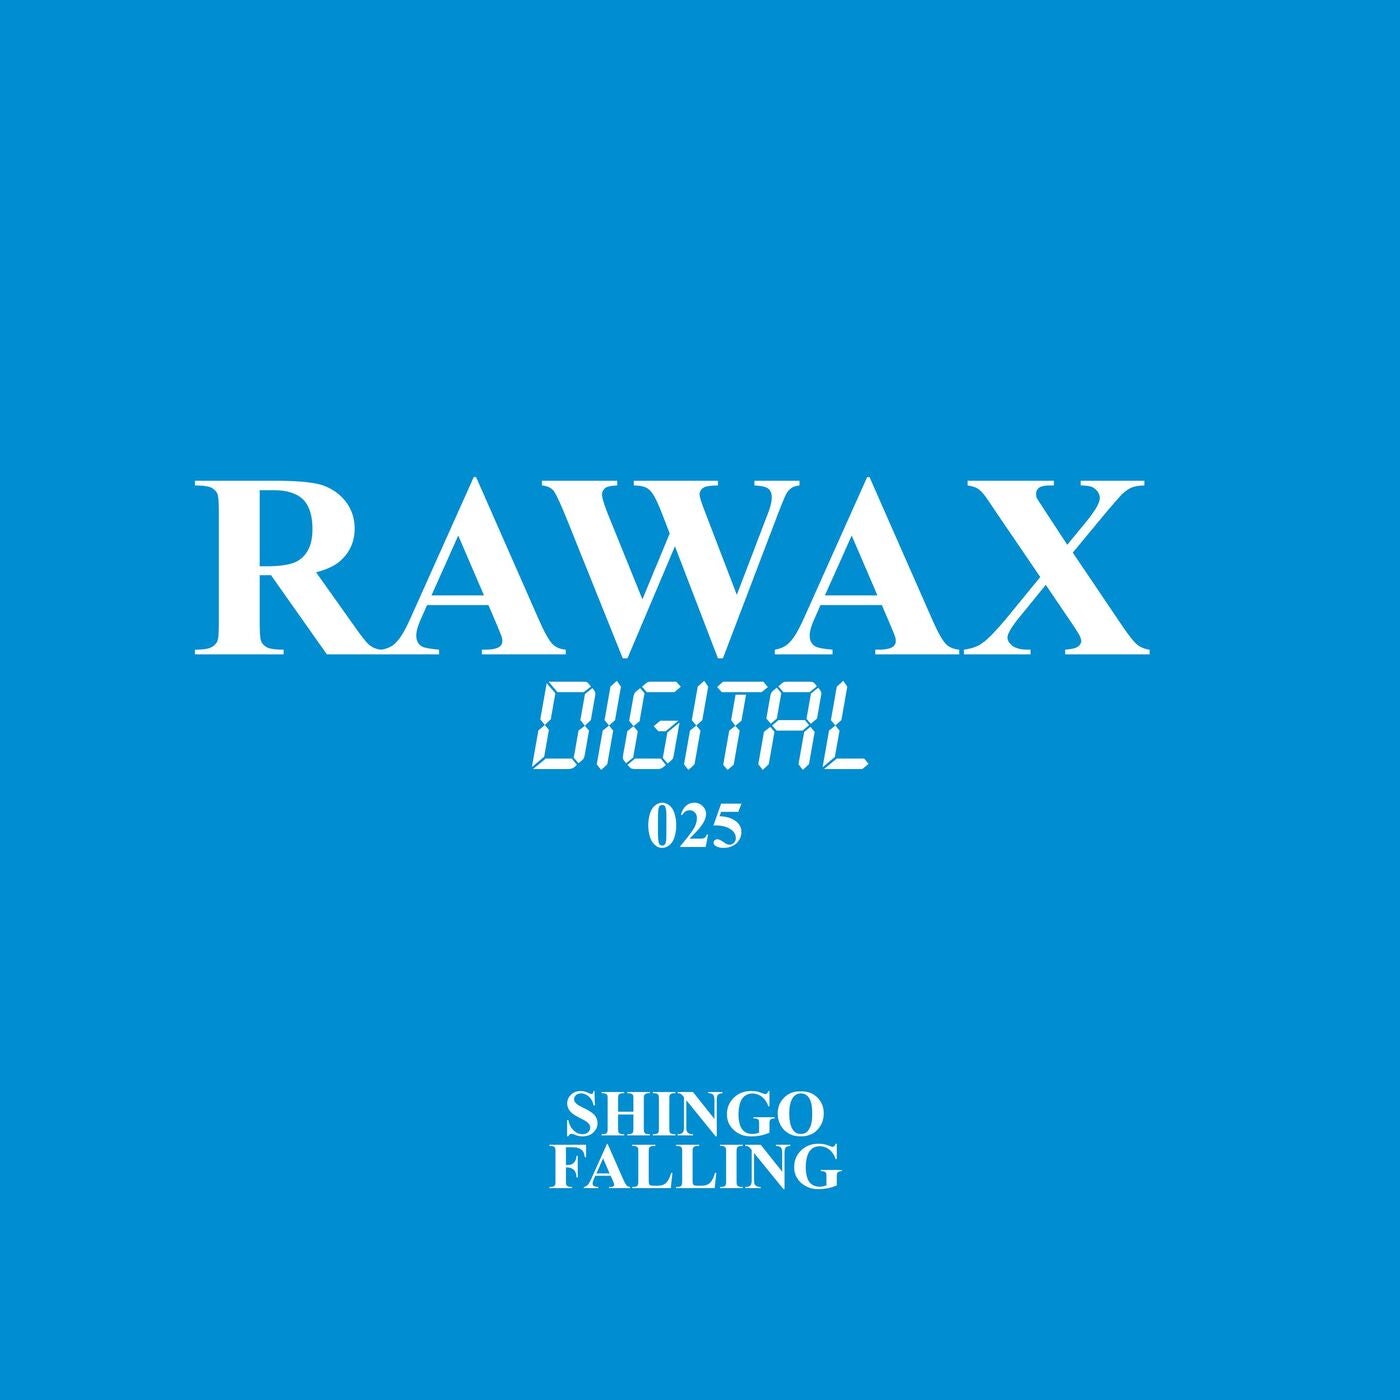 Rawax artists & music download - Beatport